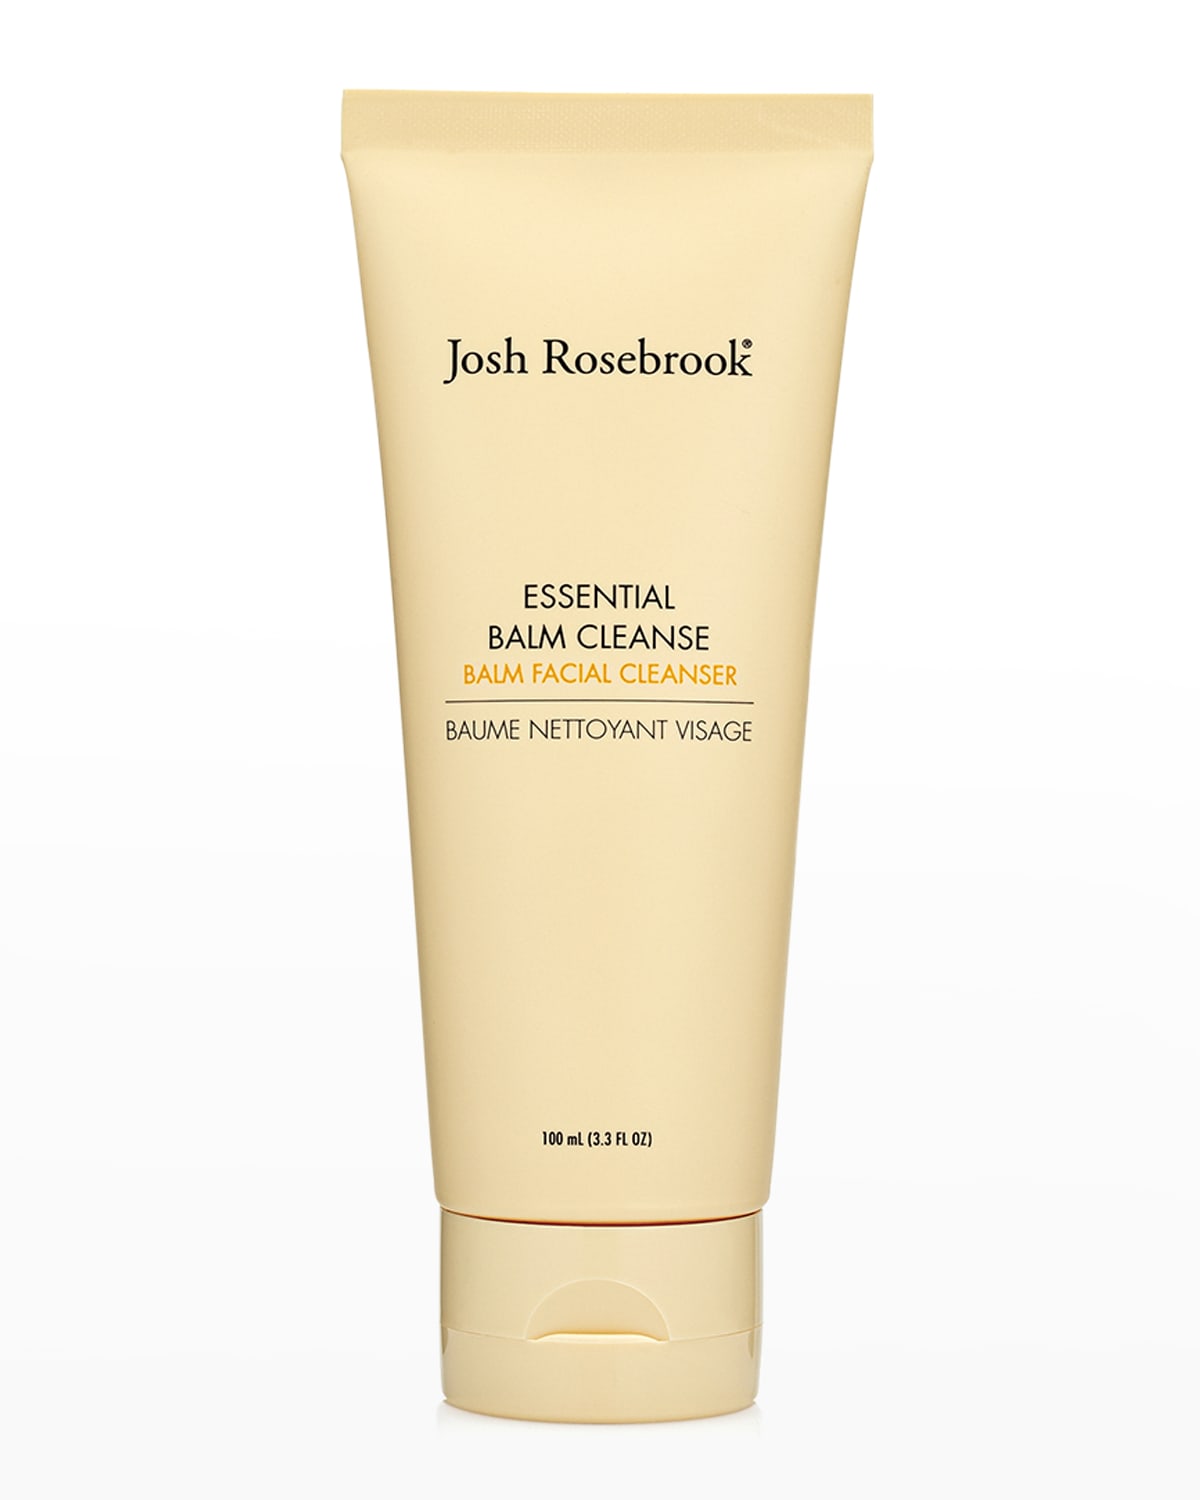 Josh Rosebrook 3.4 oz. Essential Balm Cleanse